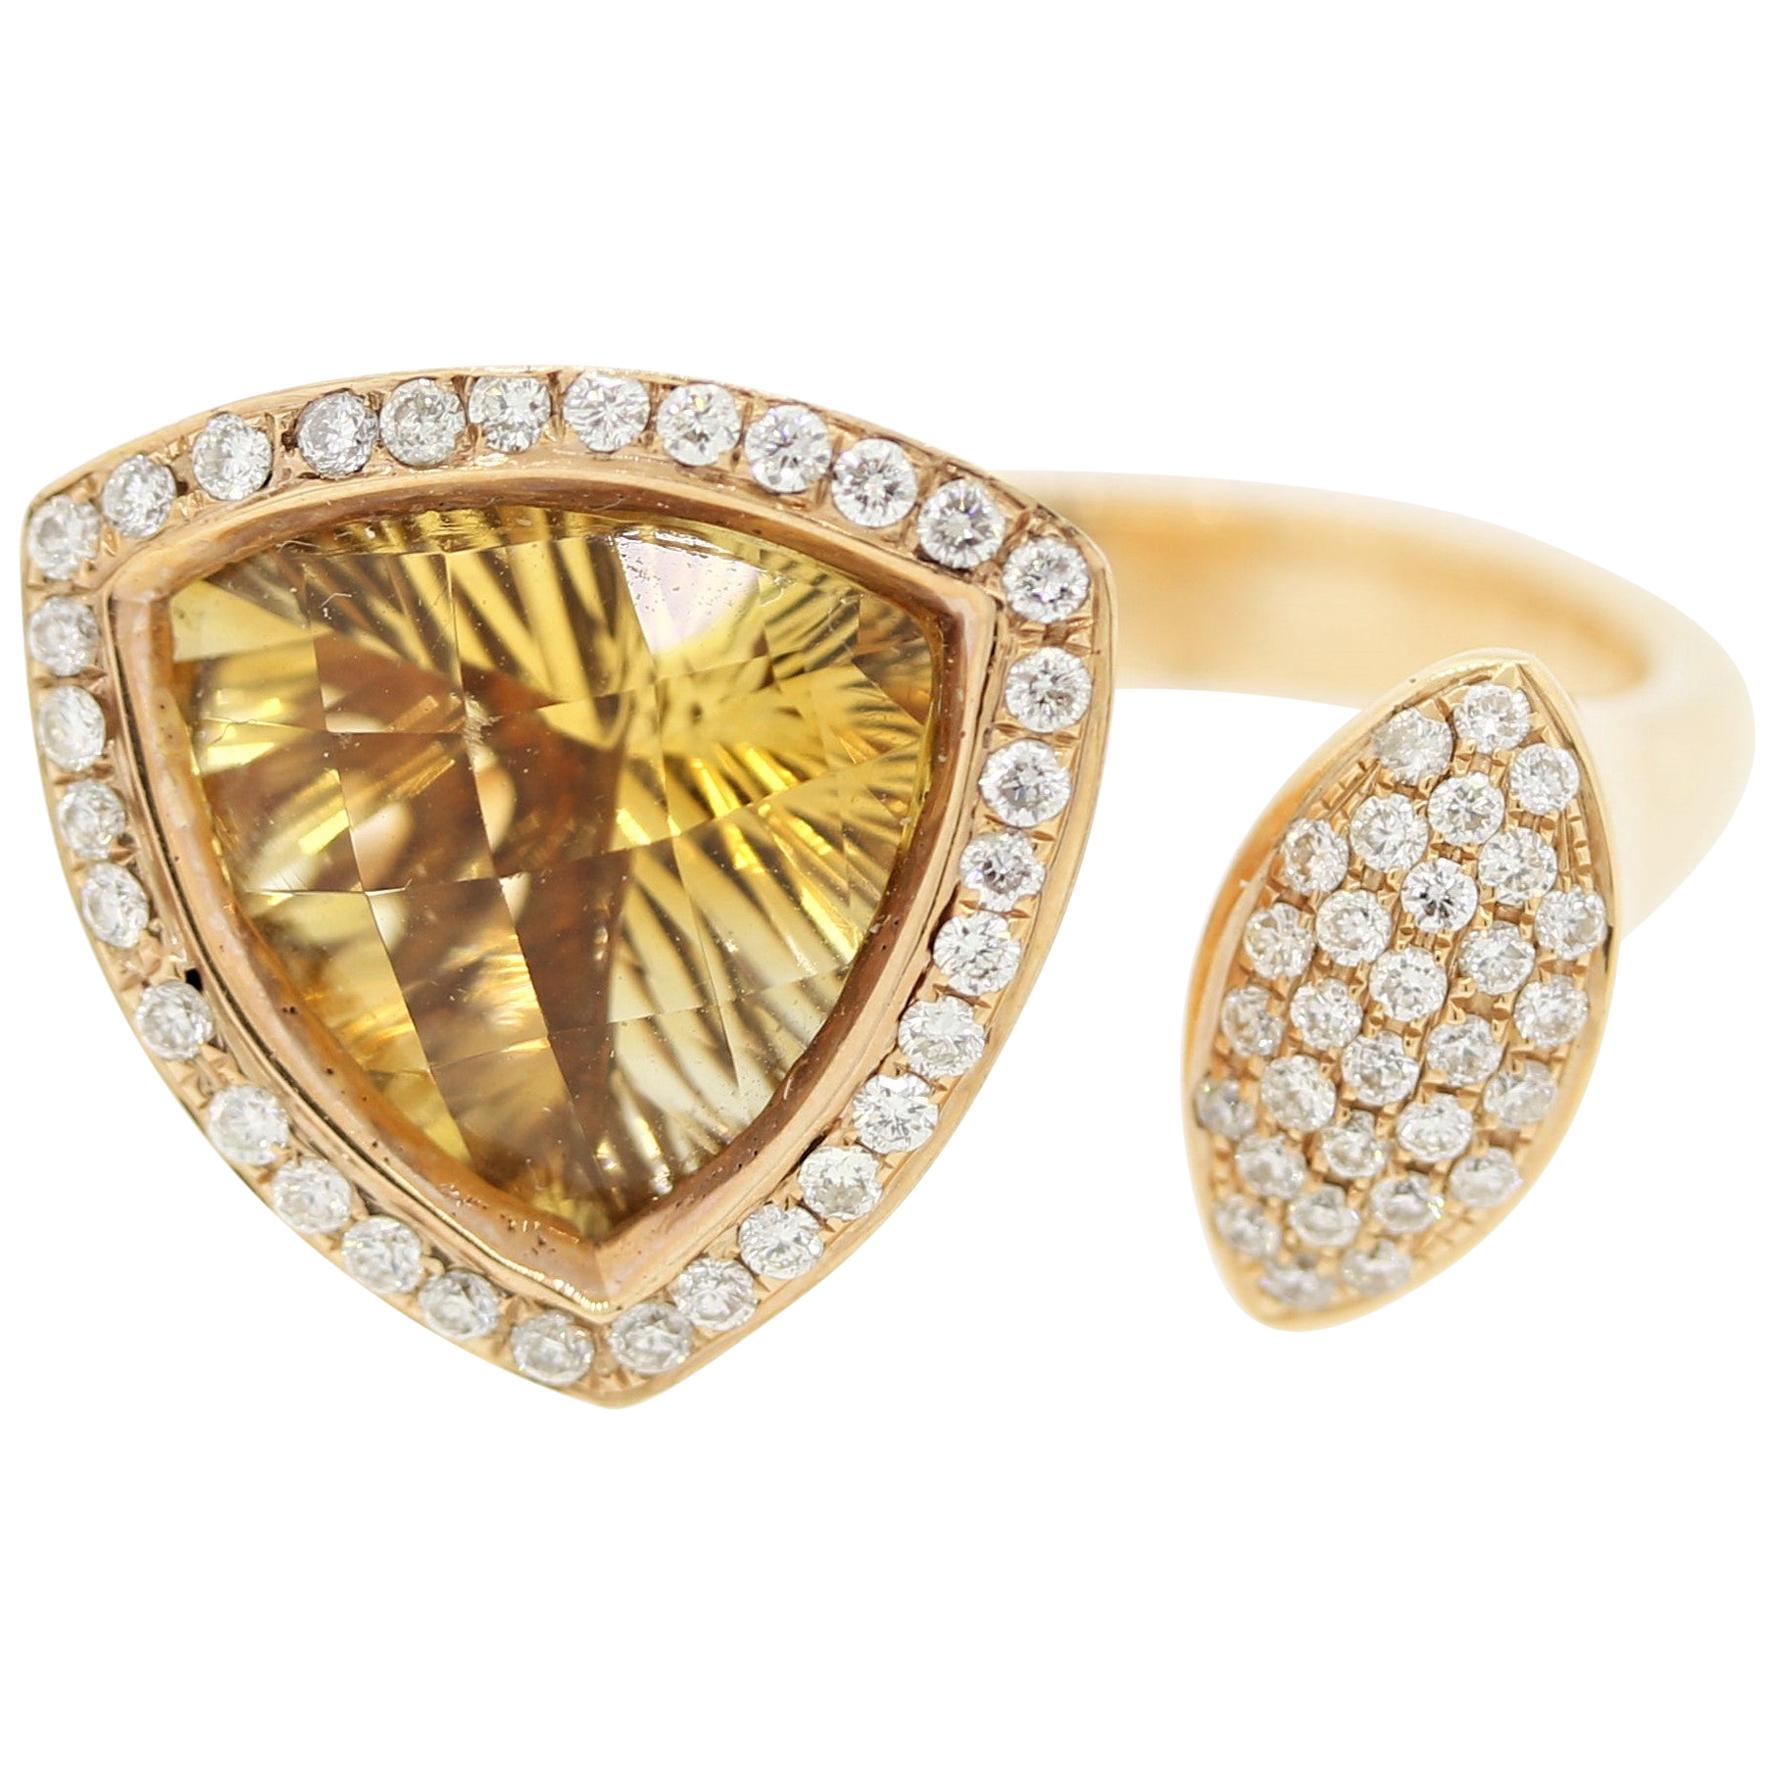 Fantasy-Cut Citrine Diamond Gold “Twin” Ring